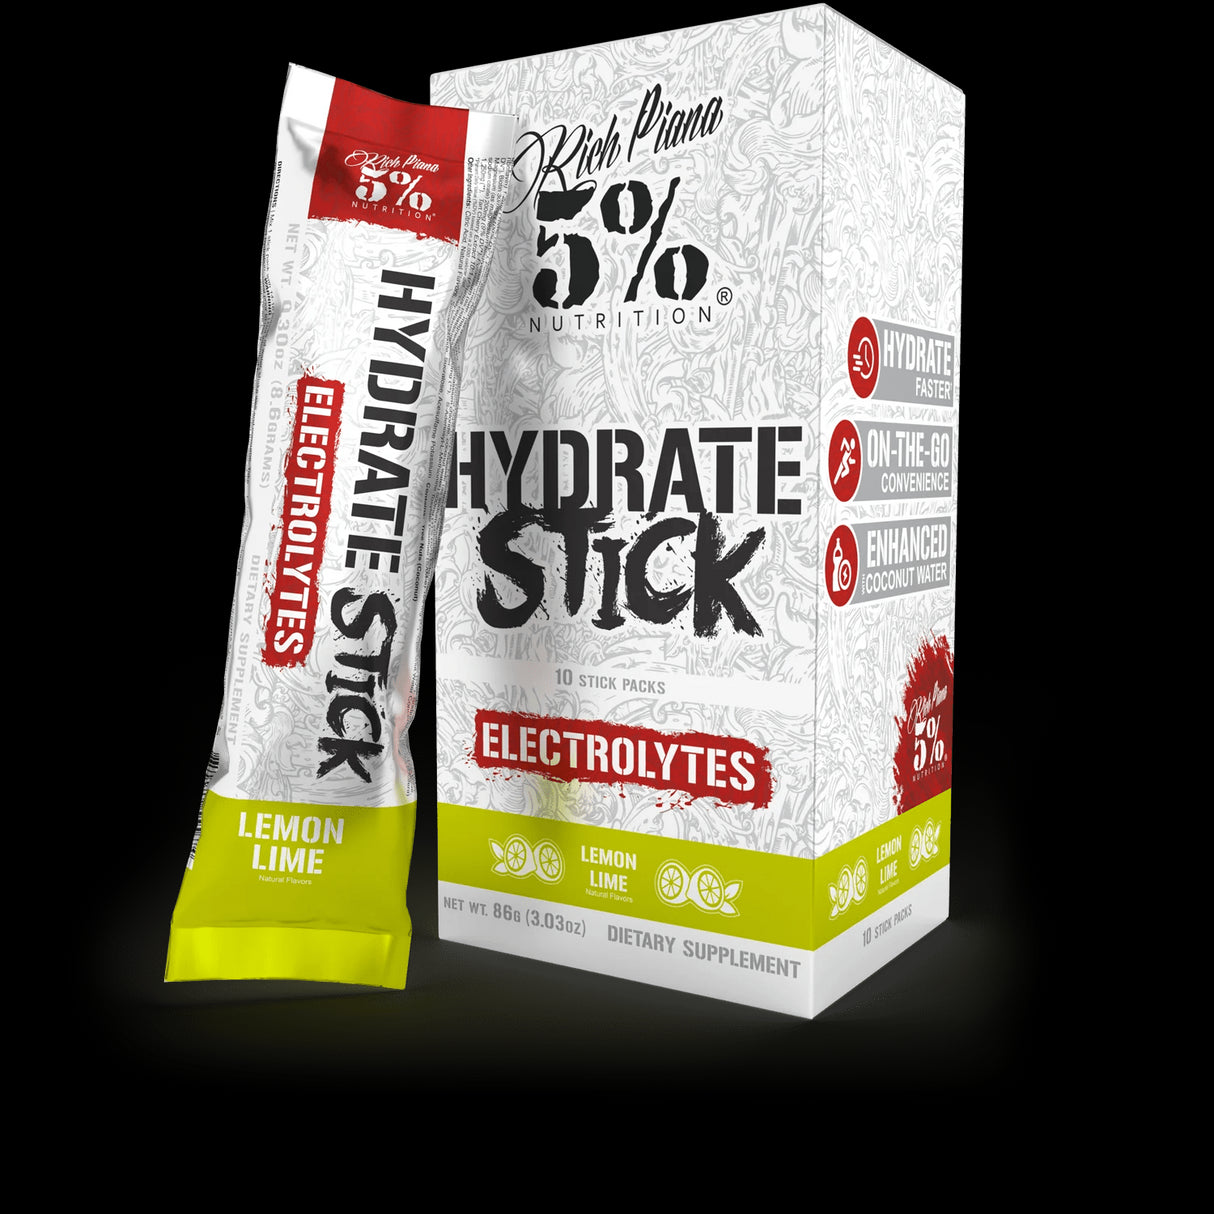 Hydrate STK Electrolytes - 5% Nutrition - Prime Sports Nutrition